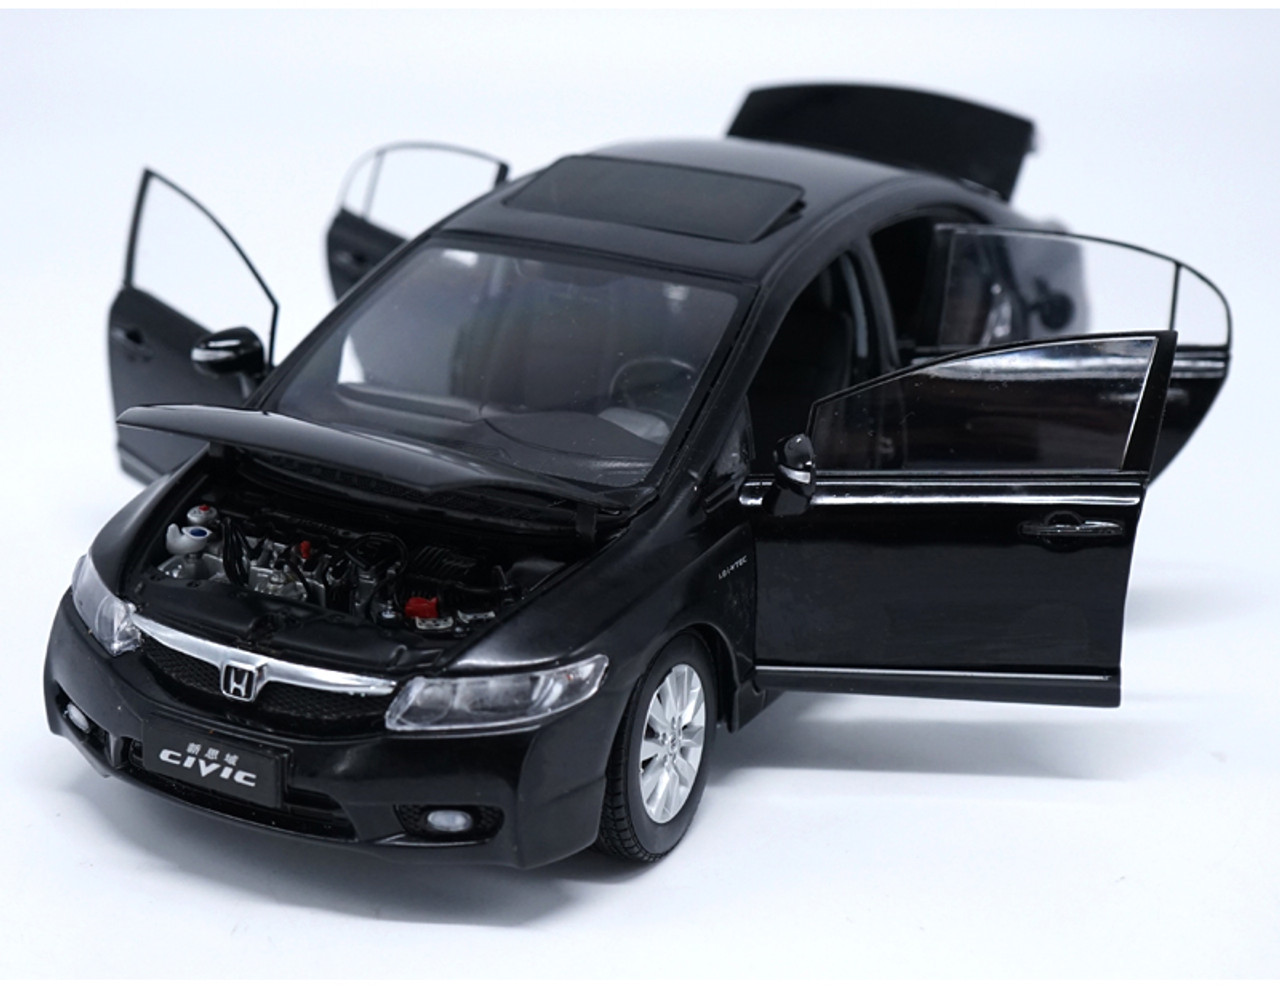 1/18 Dealer Edition Honda Civic (Black) 8th Generation (2006–2011) Diecast Car Model